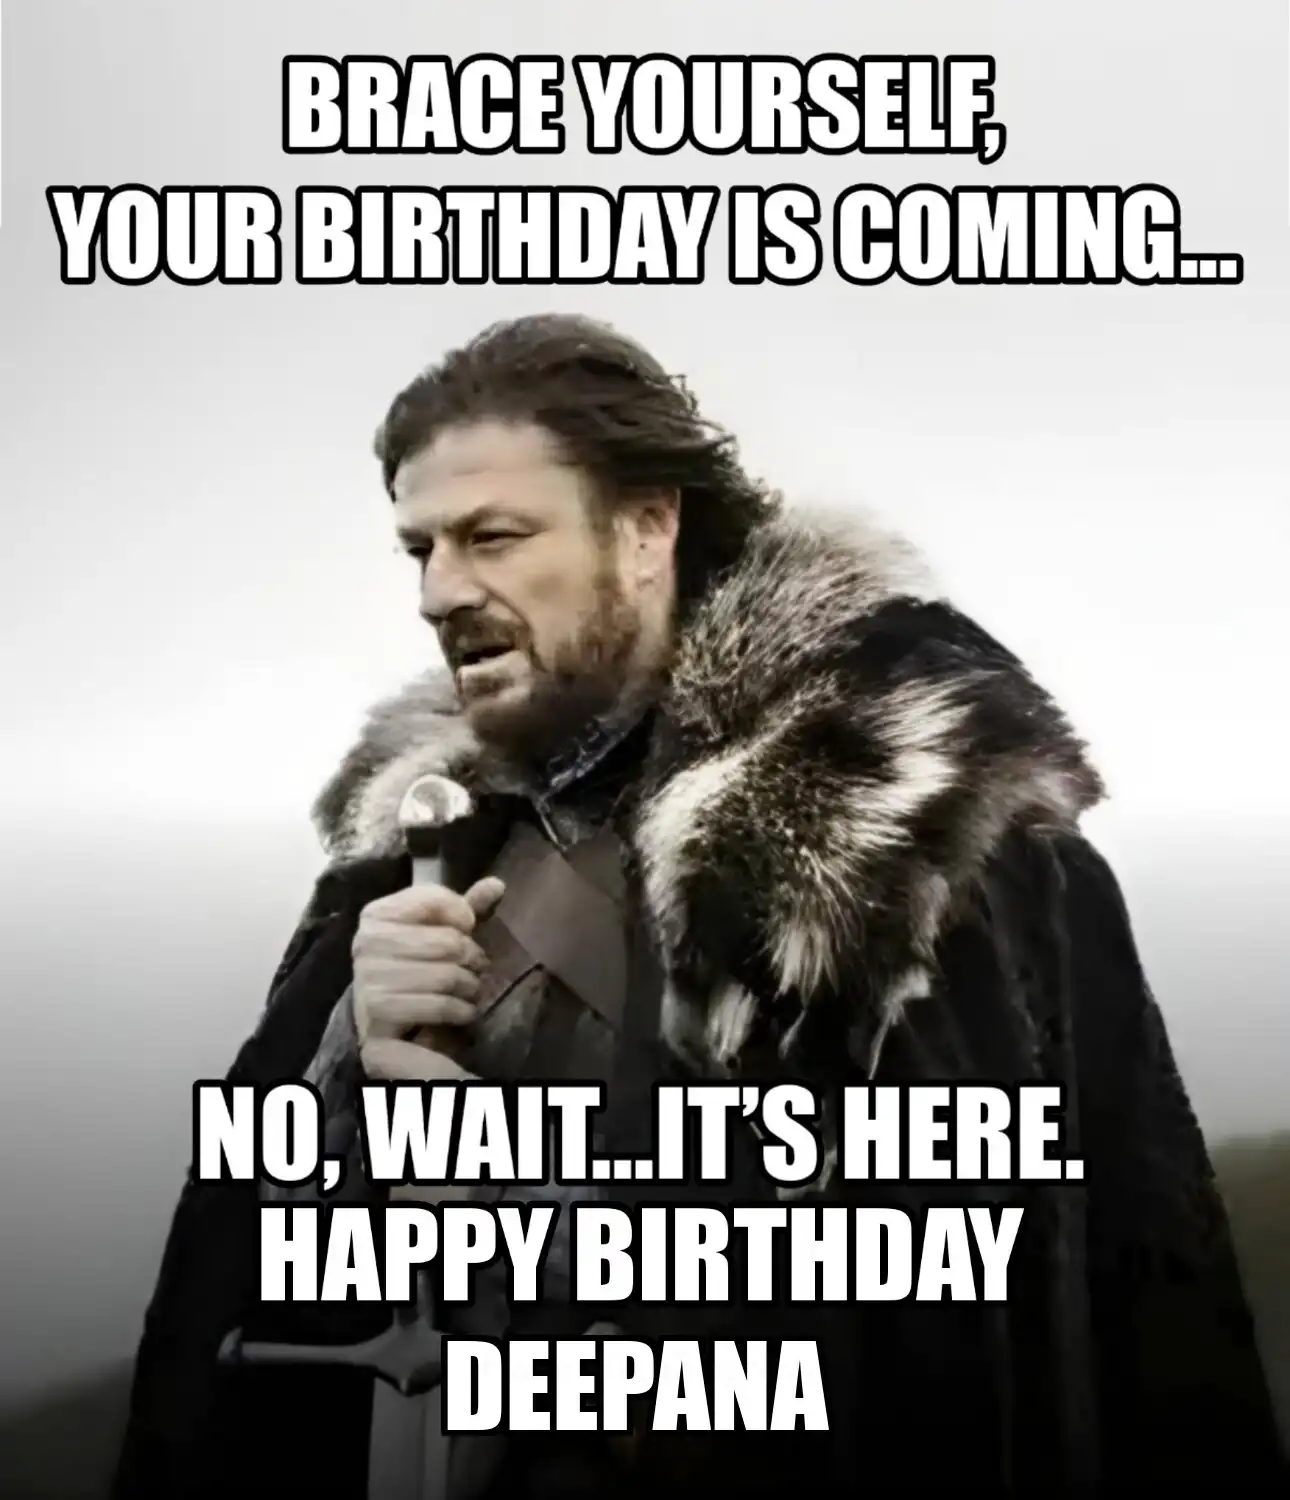 Happy Birthday Deepana Brace Yourself Your Birthday Is Coming Meme